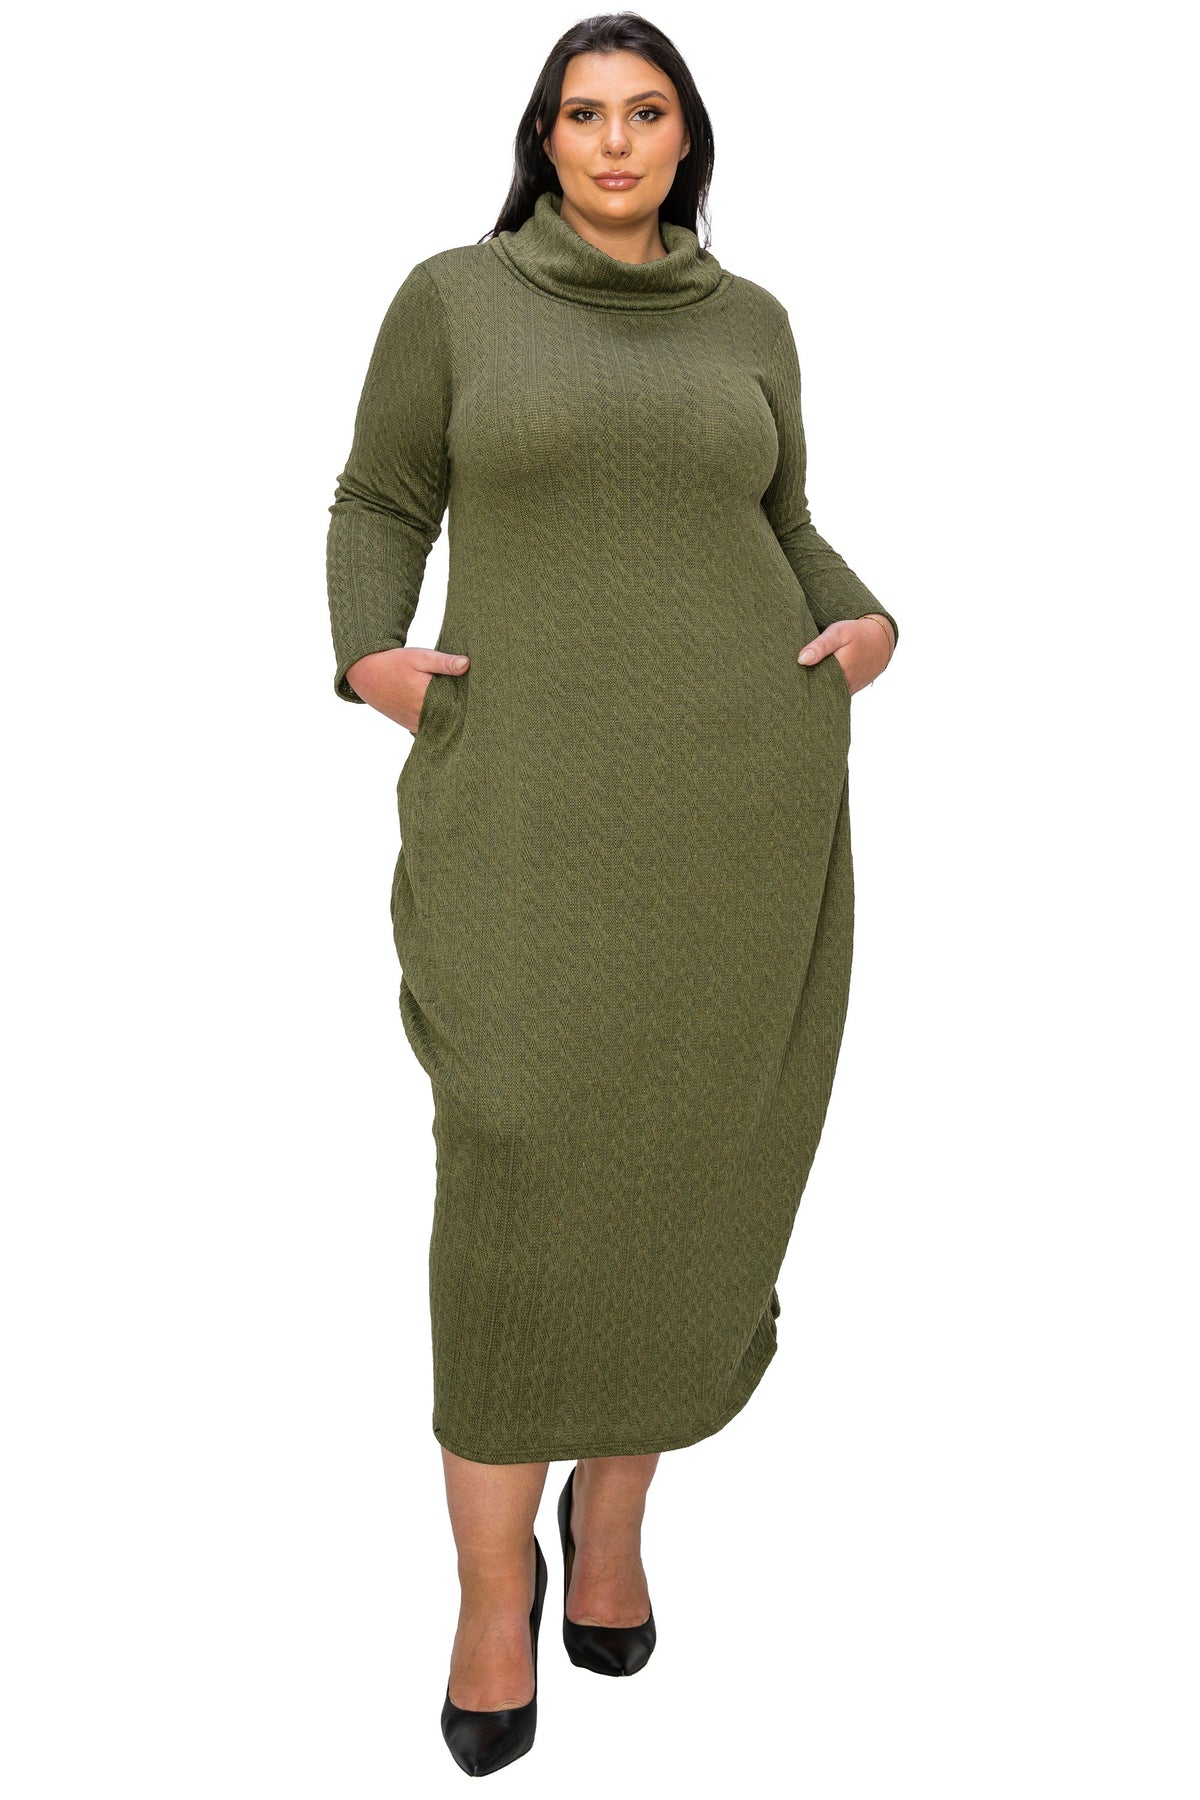 Lana Cowl Turtle Neck Pocket Sweater Dress